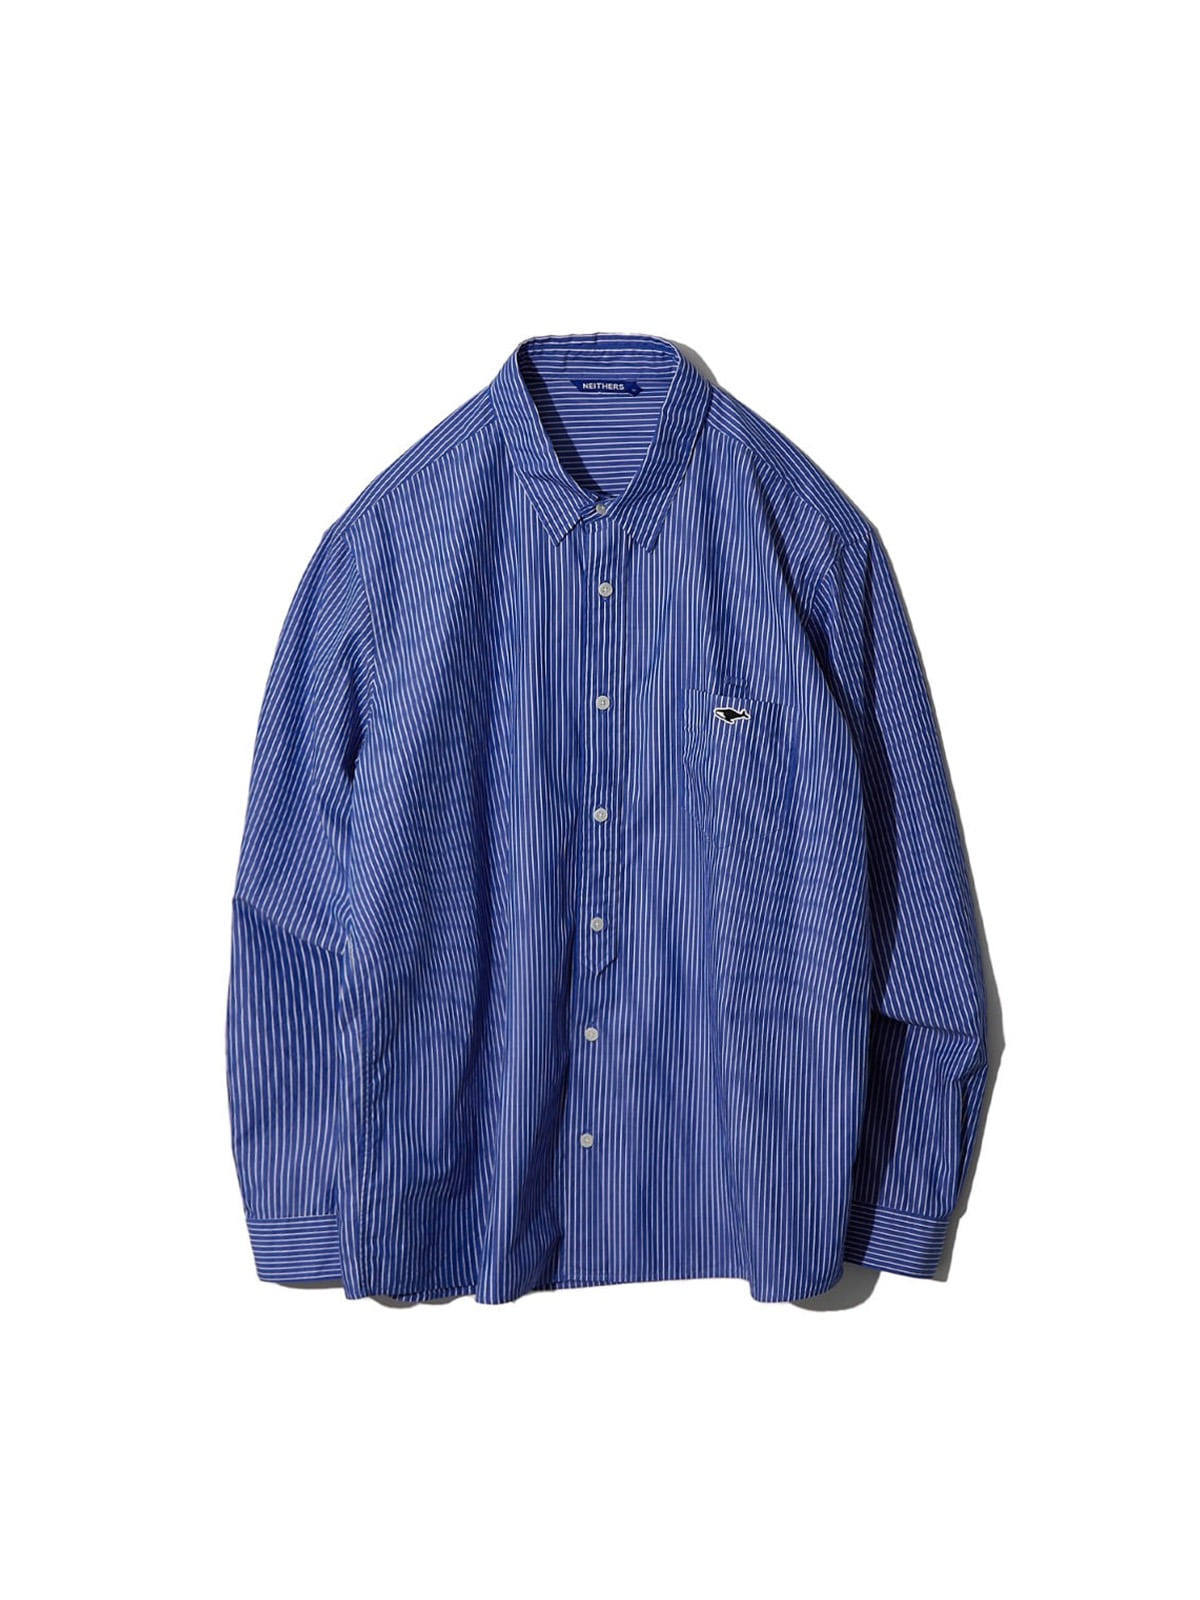 Comfort Shirt (Royal Blue Stripe)